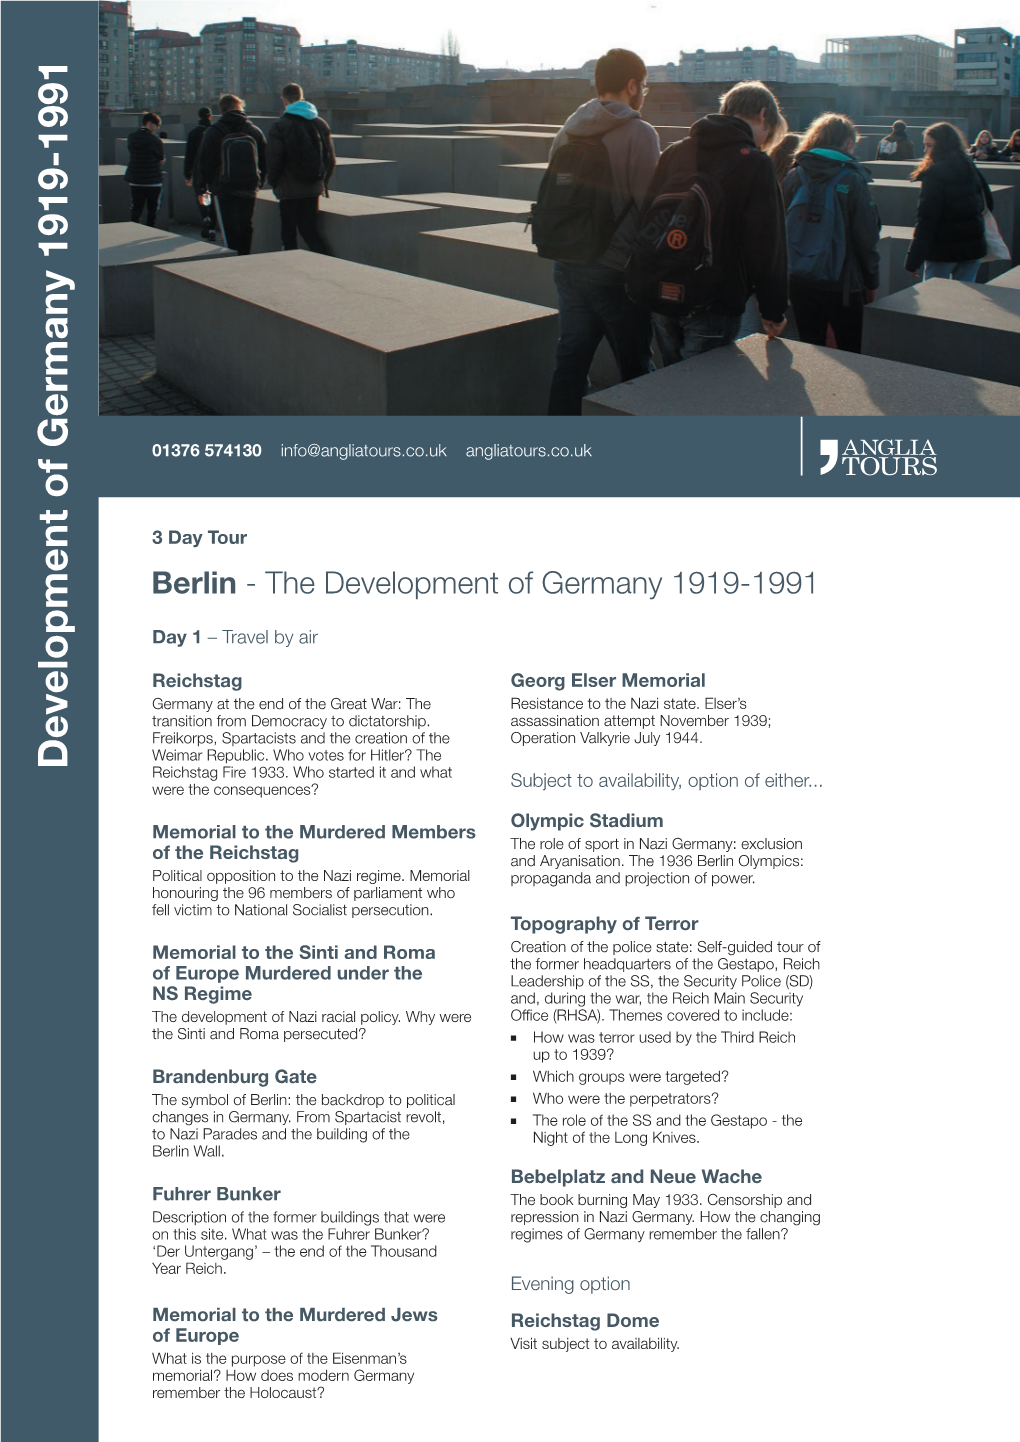 Development of Germany 1919-1991